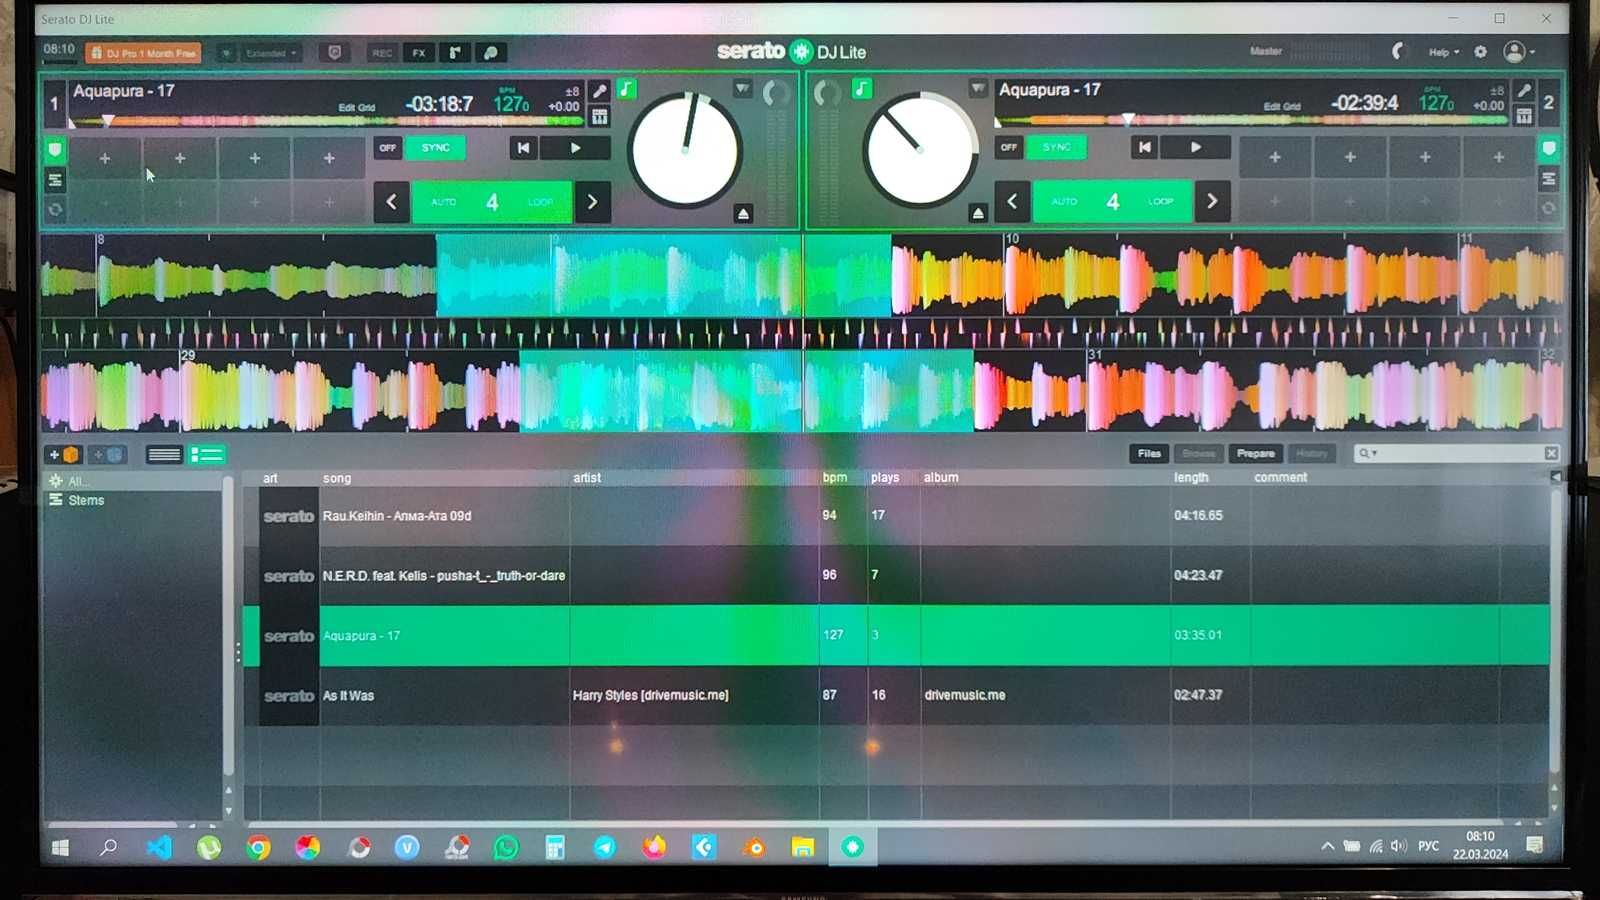 DJ контроллер Numark Mixtrack Platinum FX